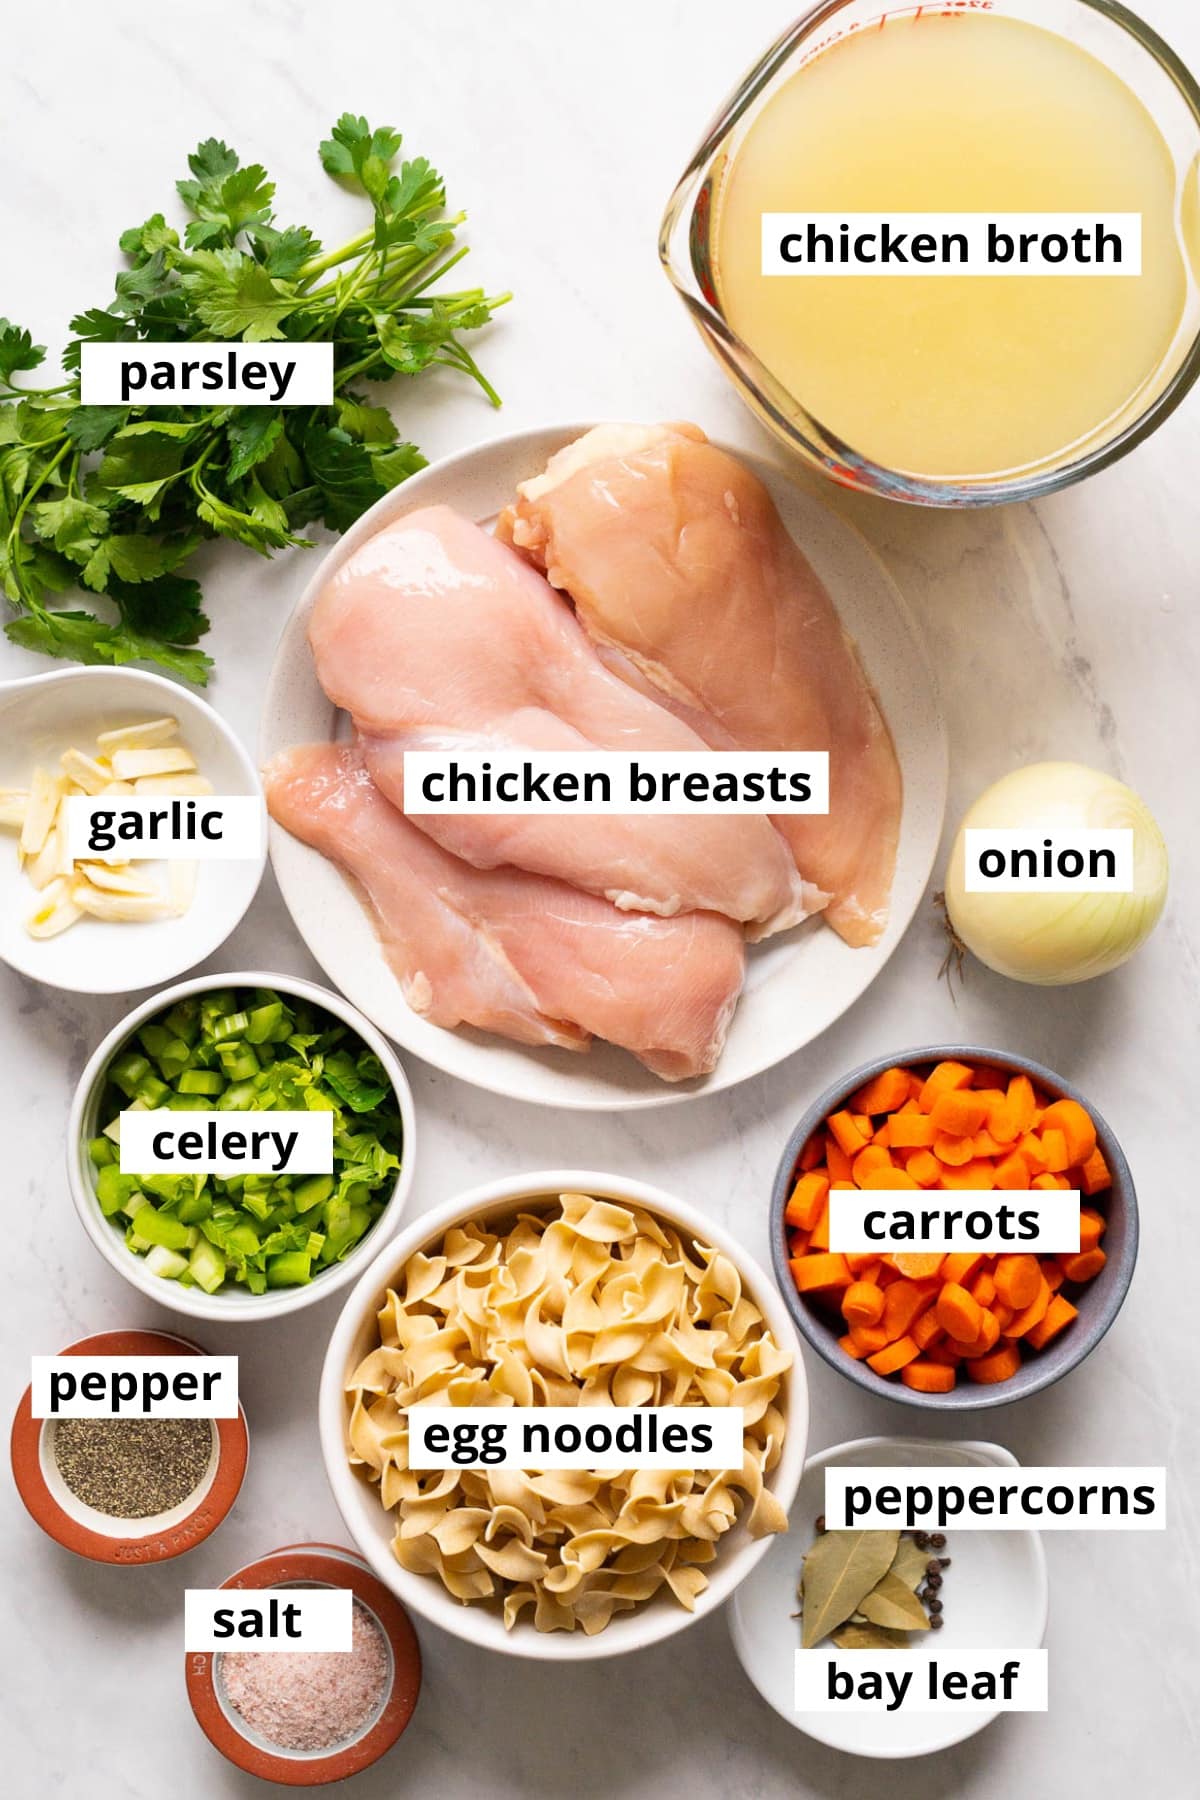 Chicken breasts, chicken broth, parsley, garlic, onion, carrots, celery, egg noodles, peppercorns, bay leaf, salt, pepper.